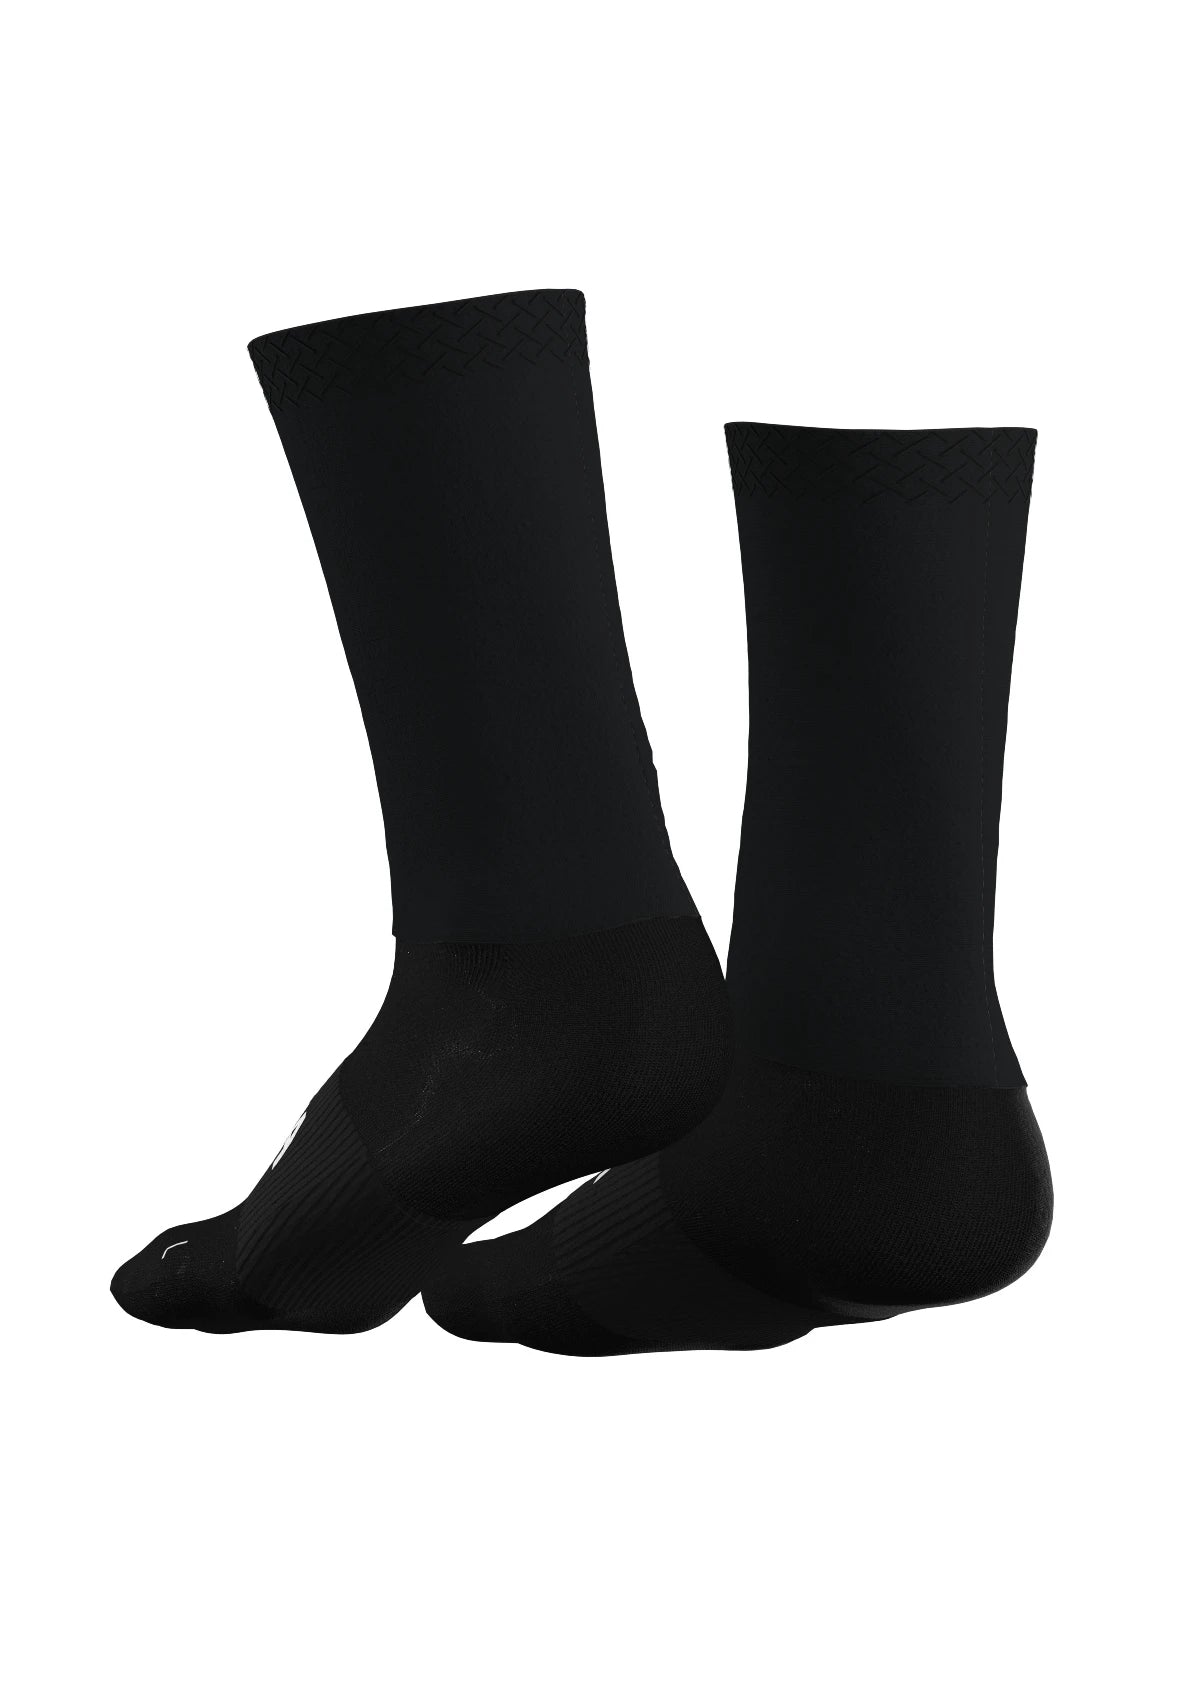 Black Soft Cycling Socks